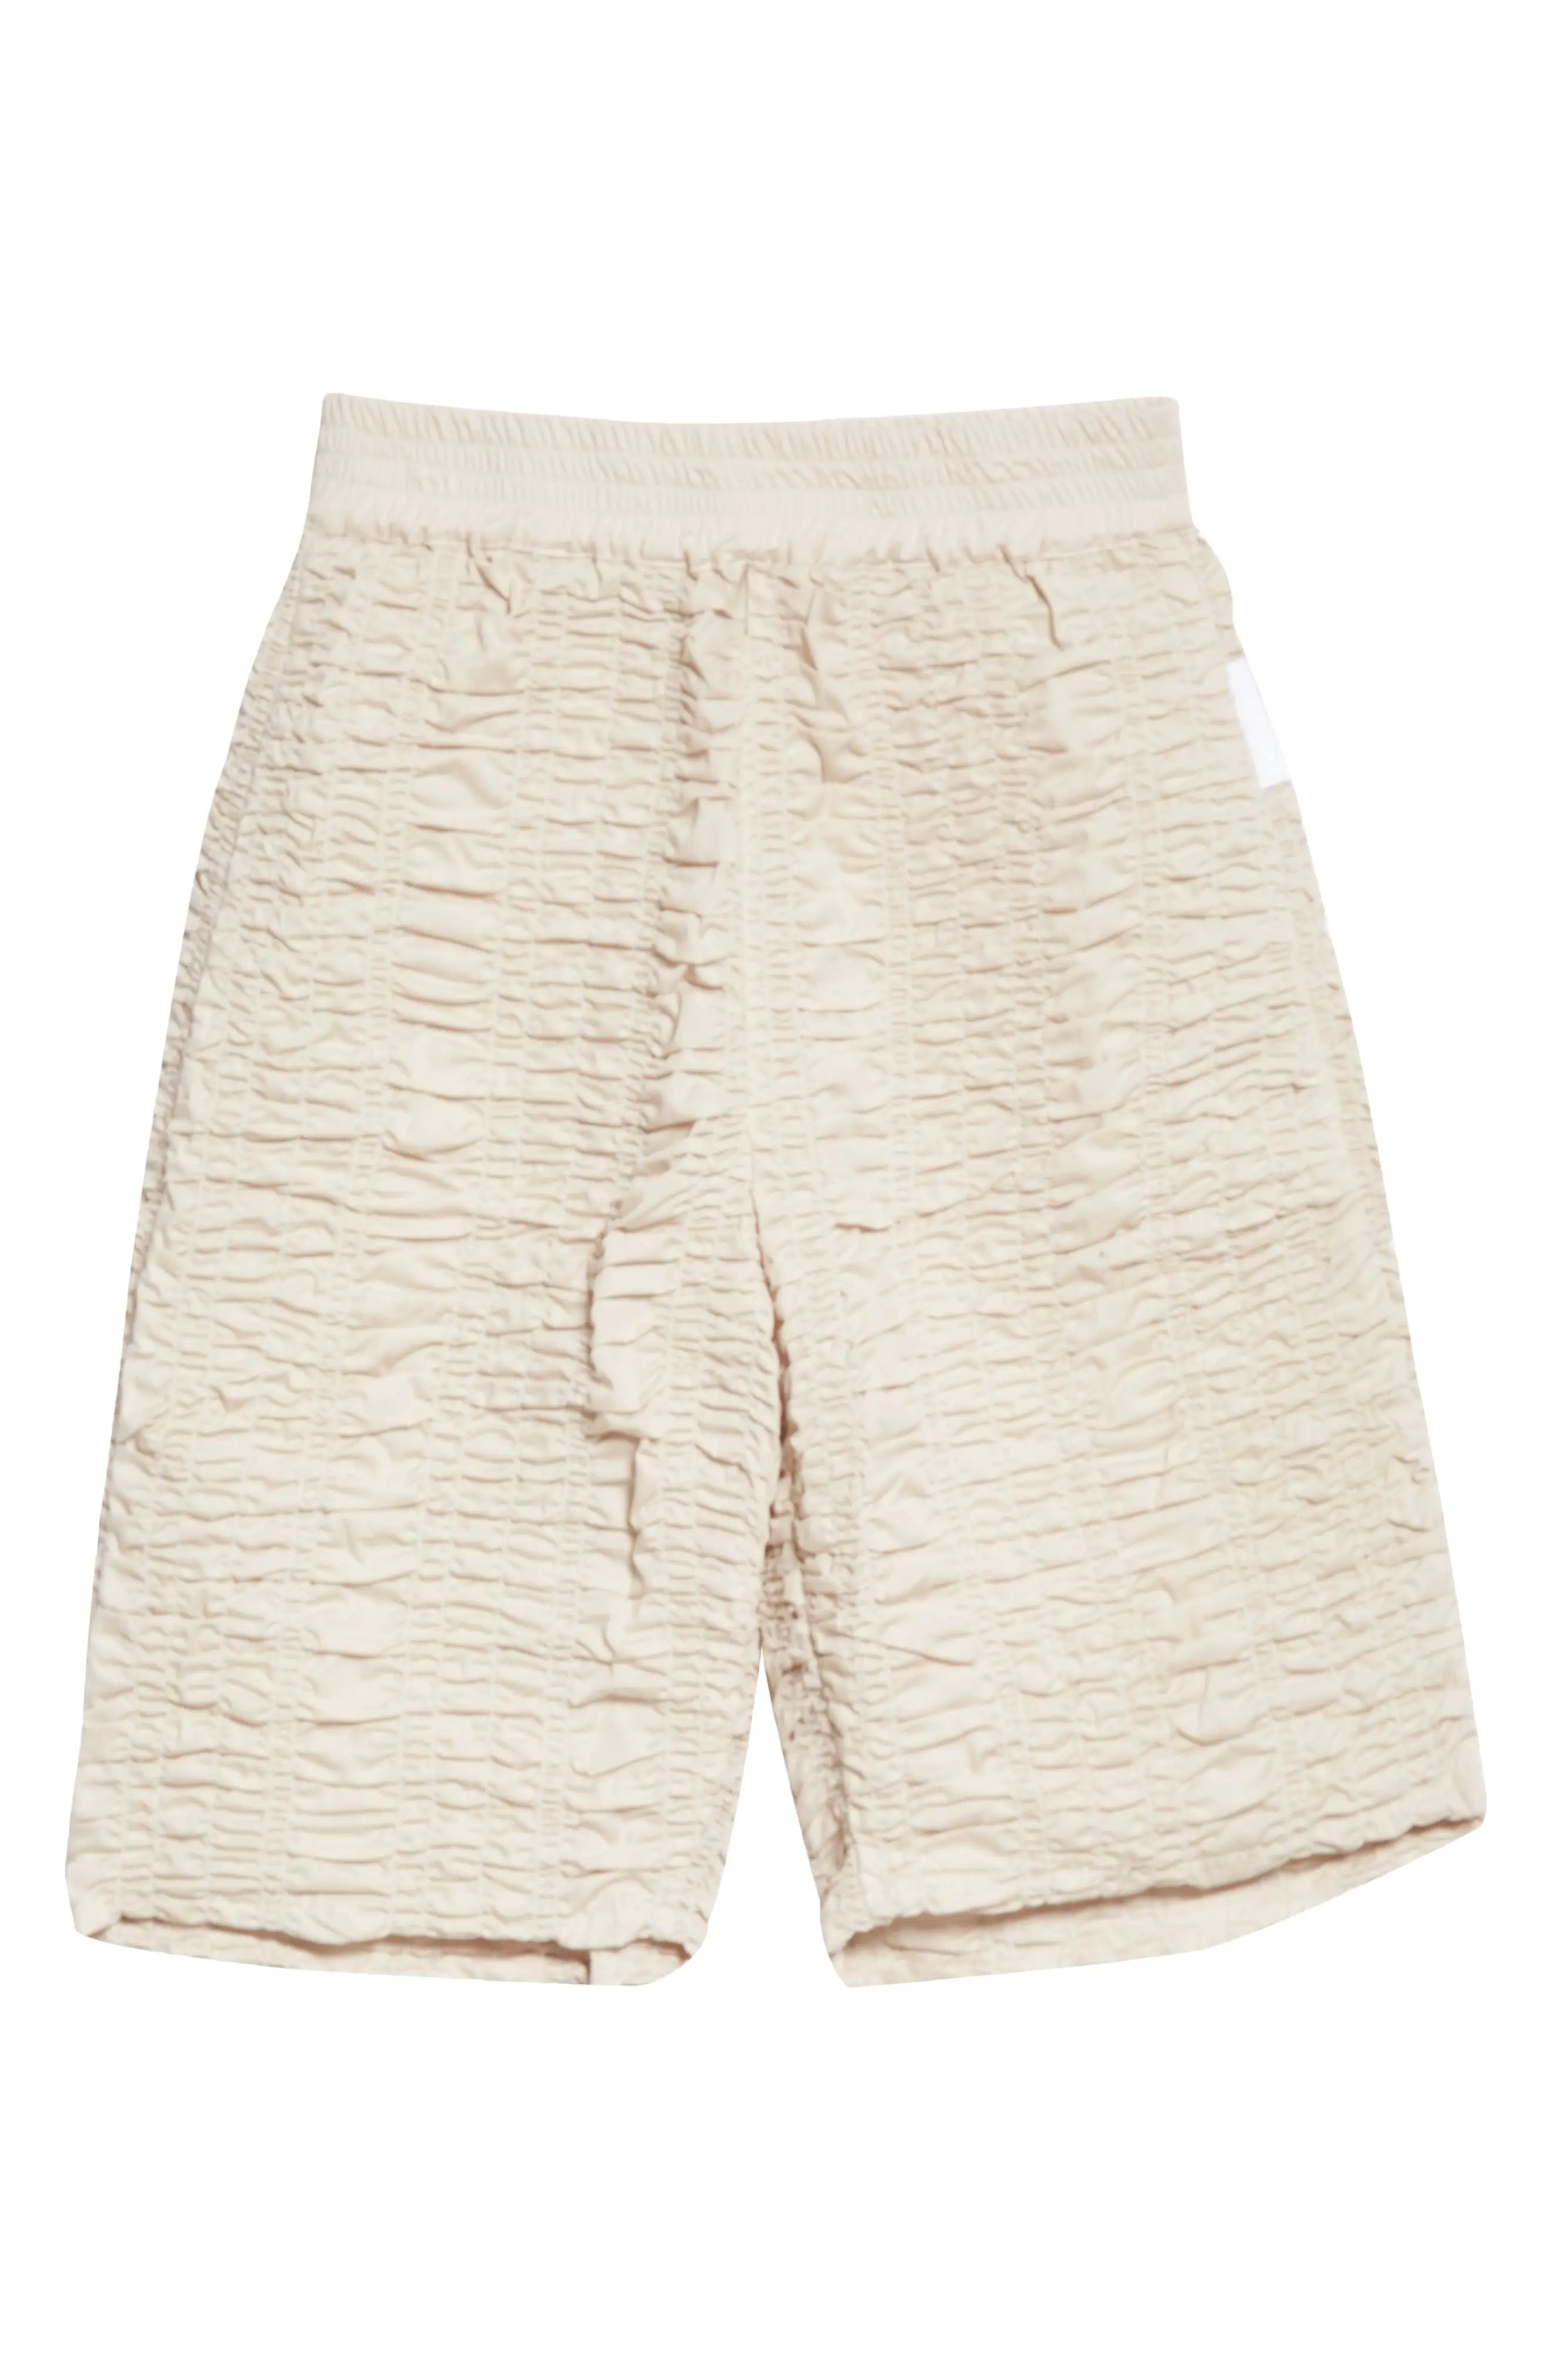 Men's Bianca Saunders Shirred Long Shorts, Size Medium - Beige | Nordstrom